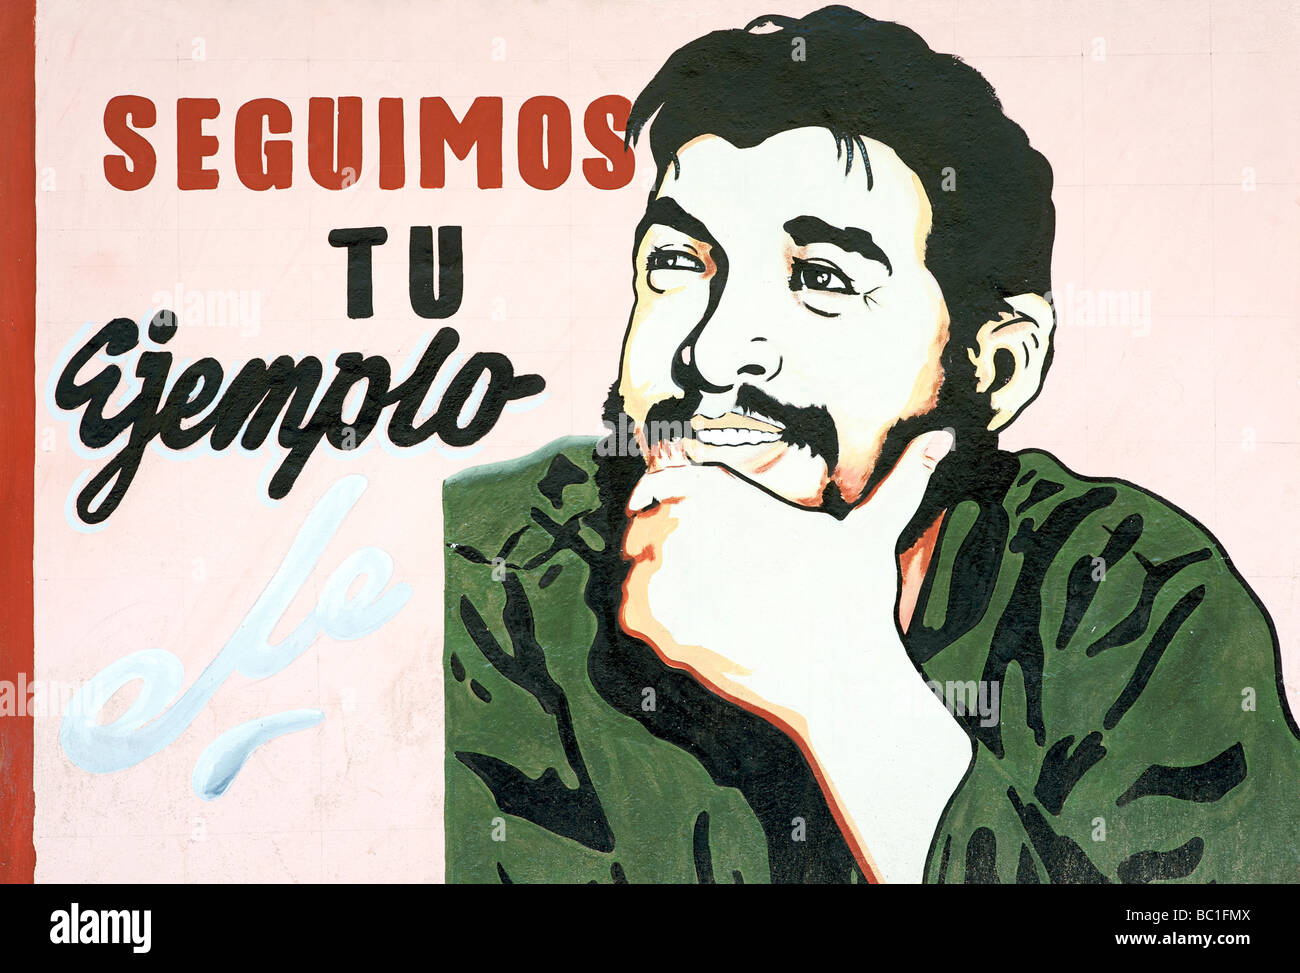 Billboard socialiste cubain faeturing Che Guevara. CHE, de suivre votre exemple. Cuba SEGUIMOS TU EJEMPLO, CHE. CUBA Banque D'Images